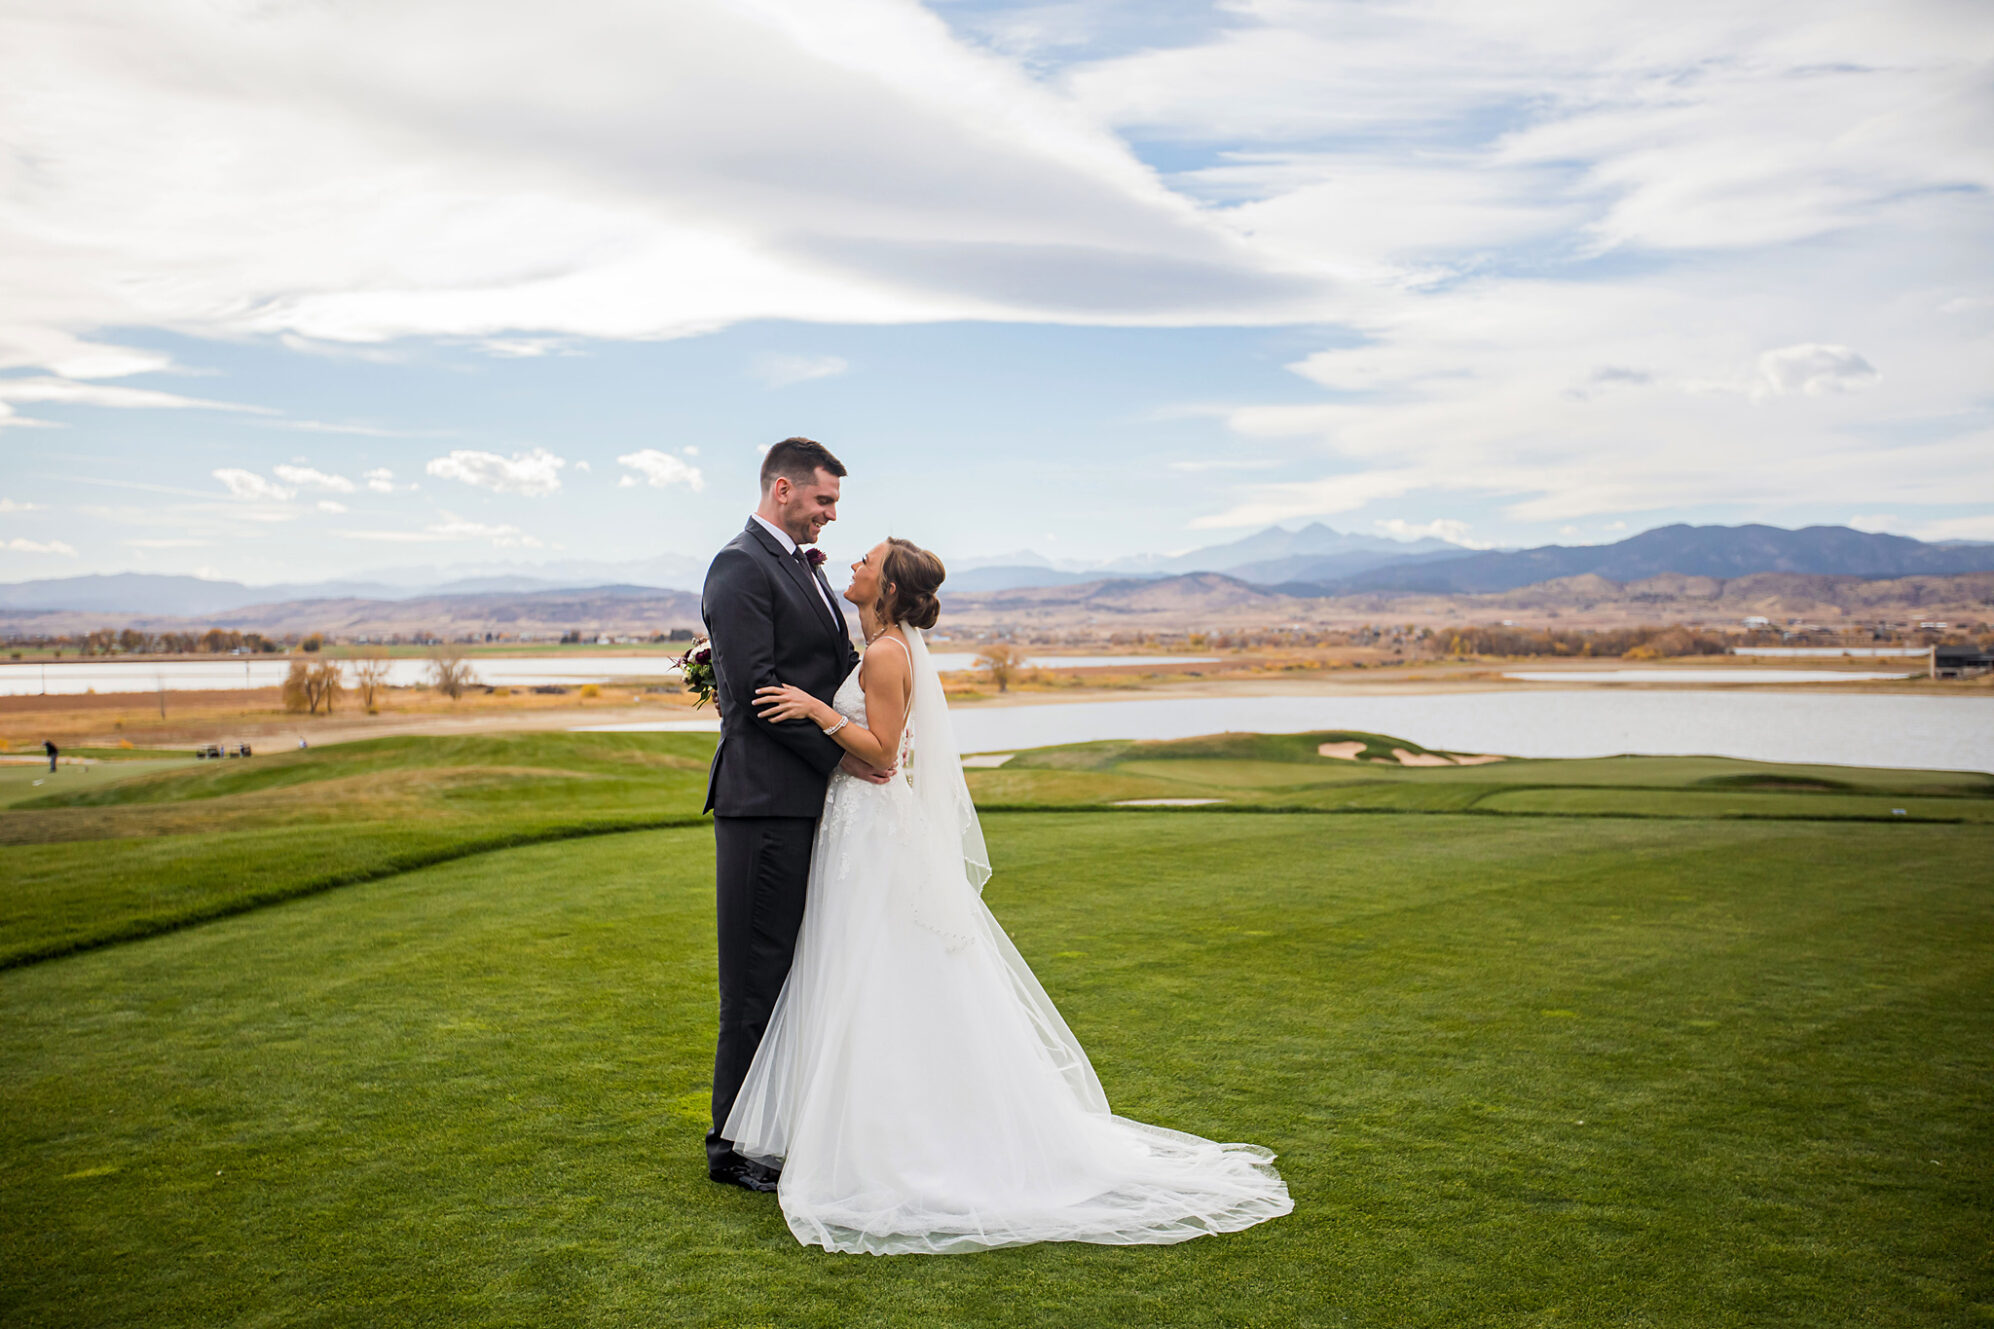 Jordi & Dave's Wedding at TPC Berthoud by Colorado Wedding Photographers, All Digital Photo and Video